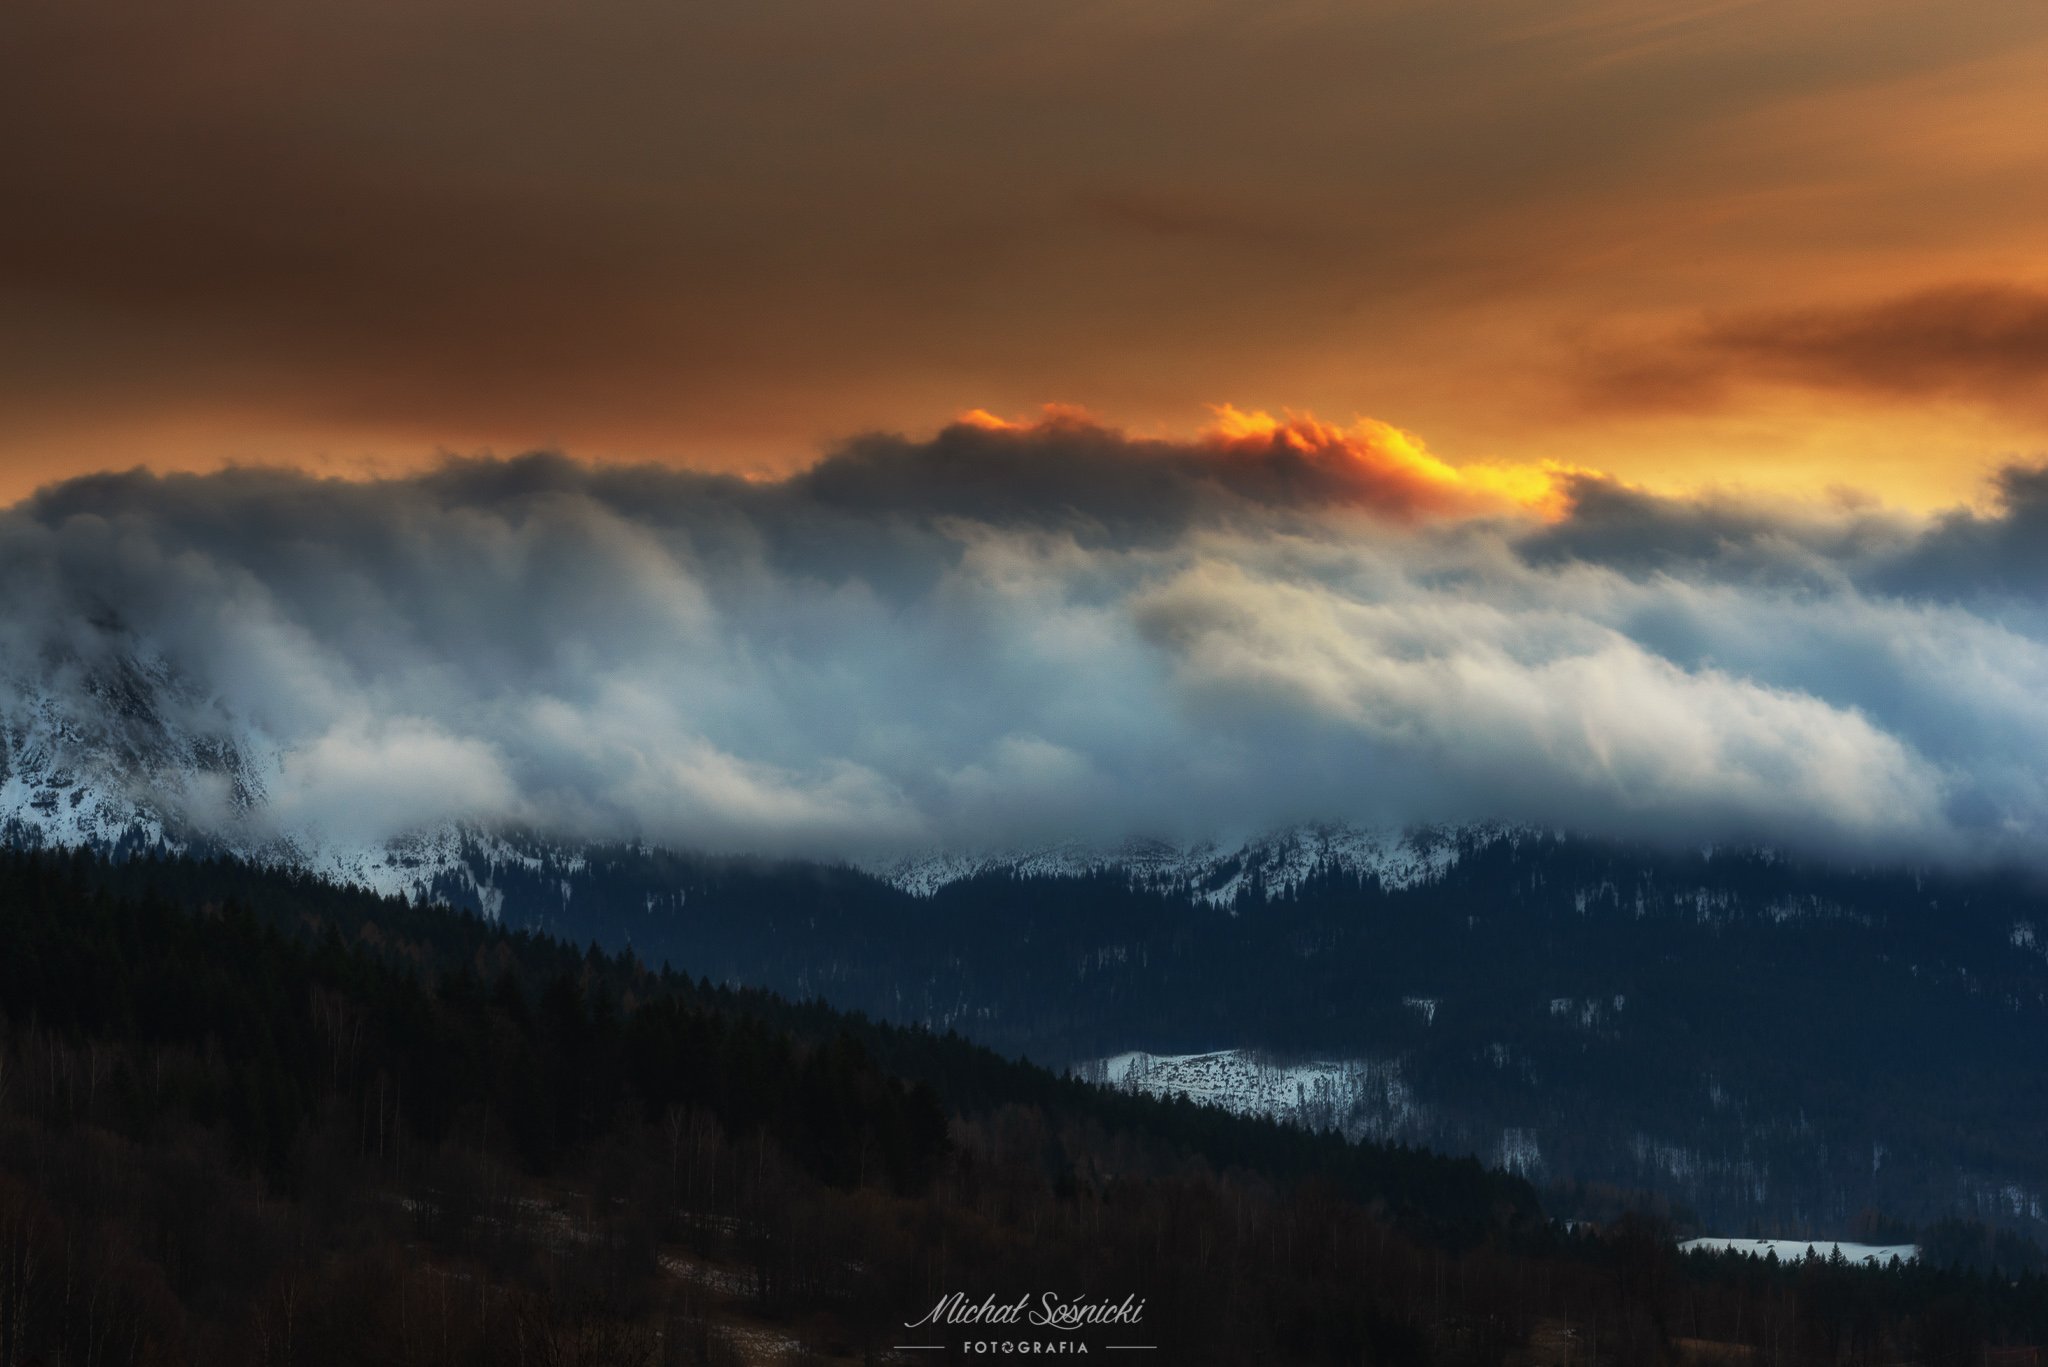 poland mountain mountains sunset cloudy sky color landscape pentax benro, Michał Sośnicki